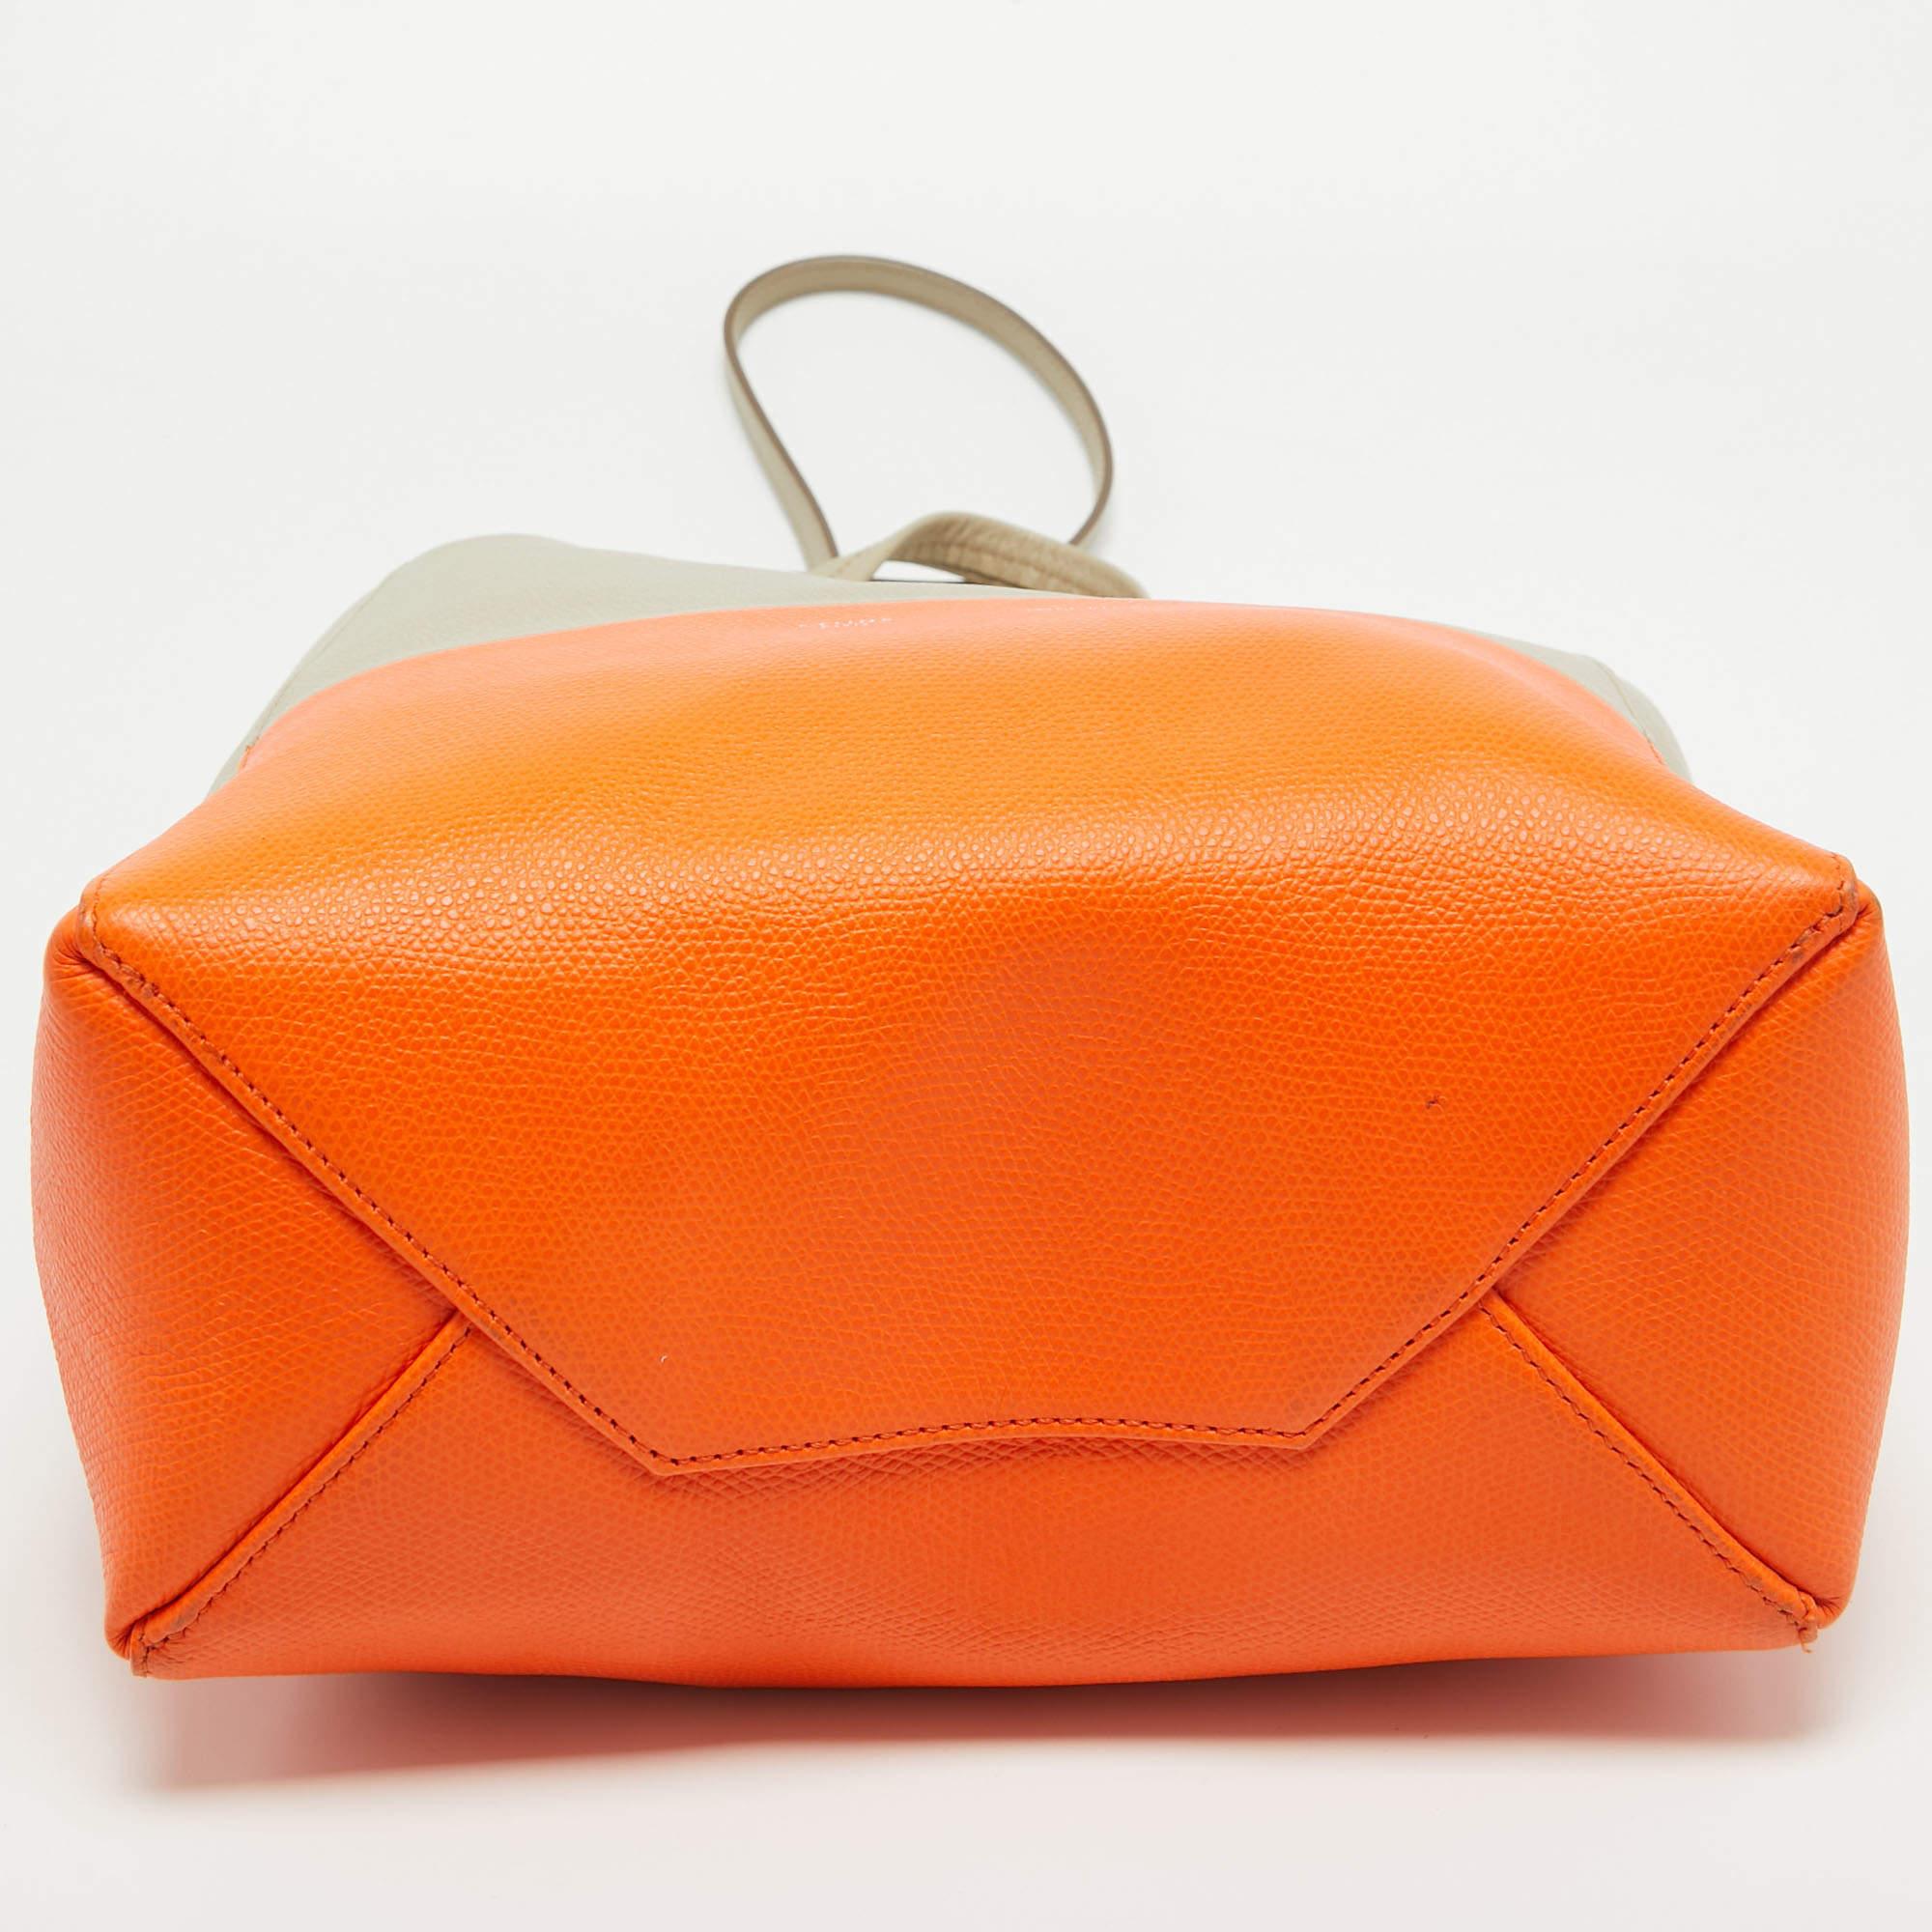 Celine Beige/Orange Leather Small Vertical Cabas Tote For Sale 4